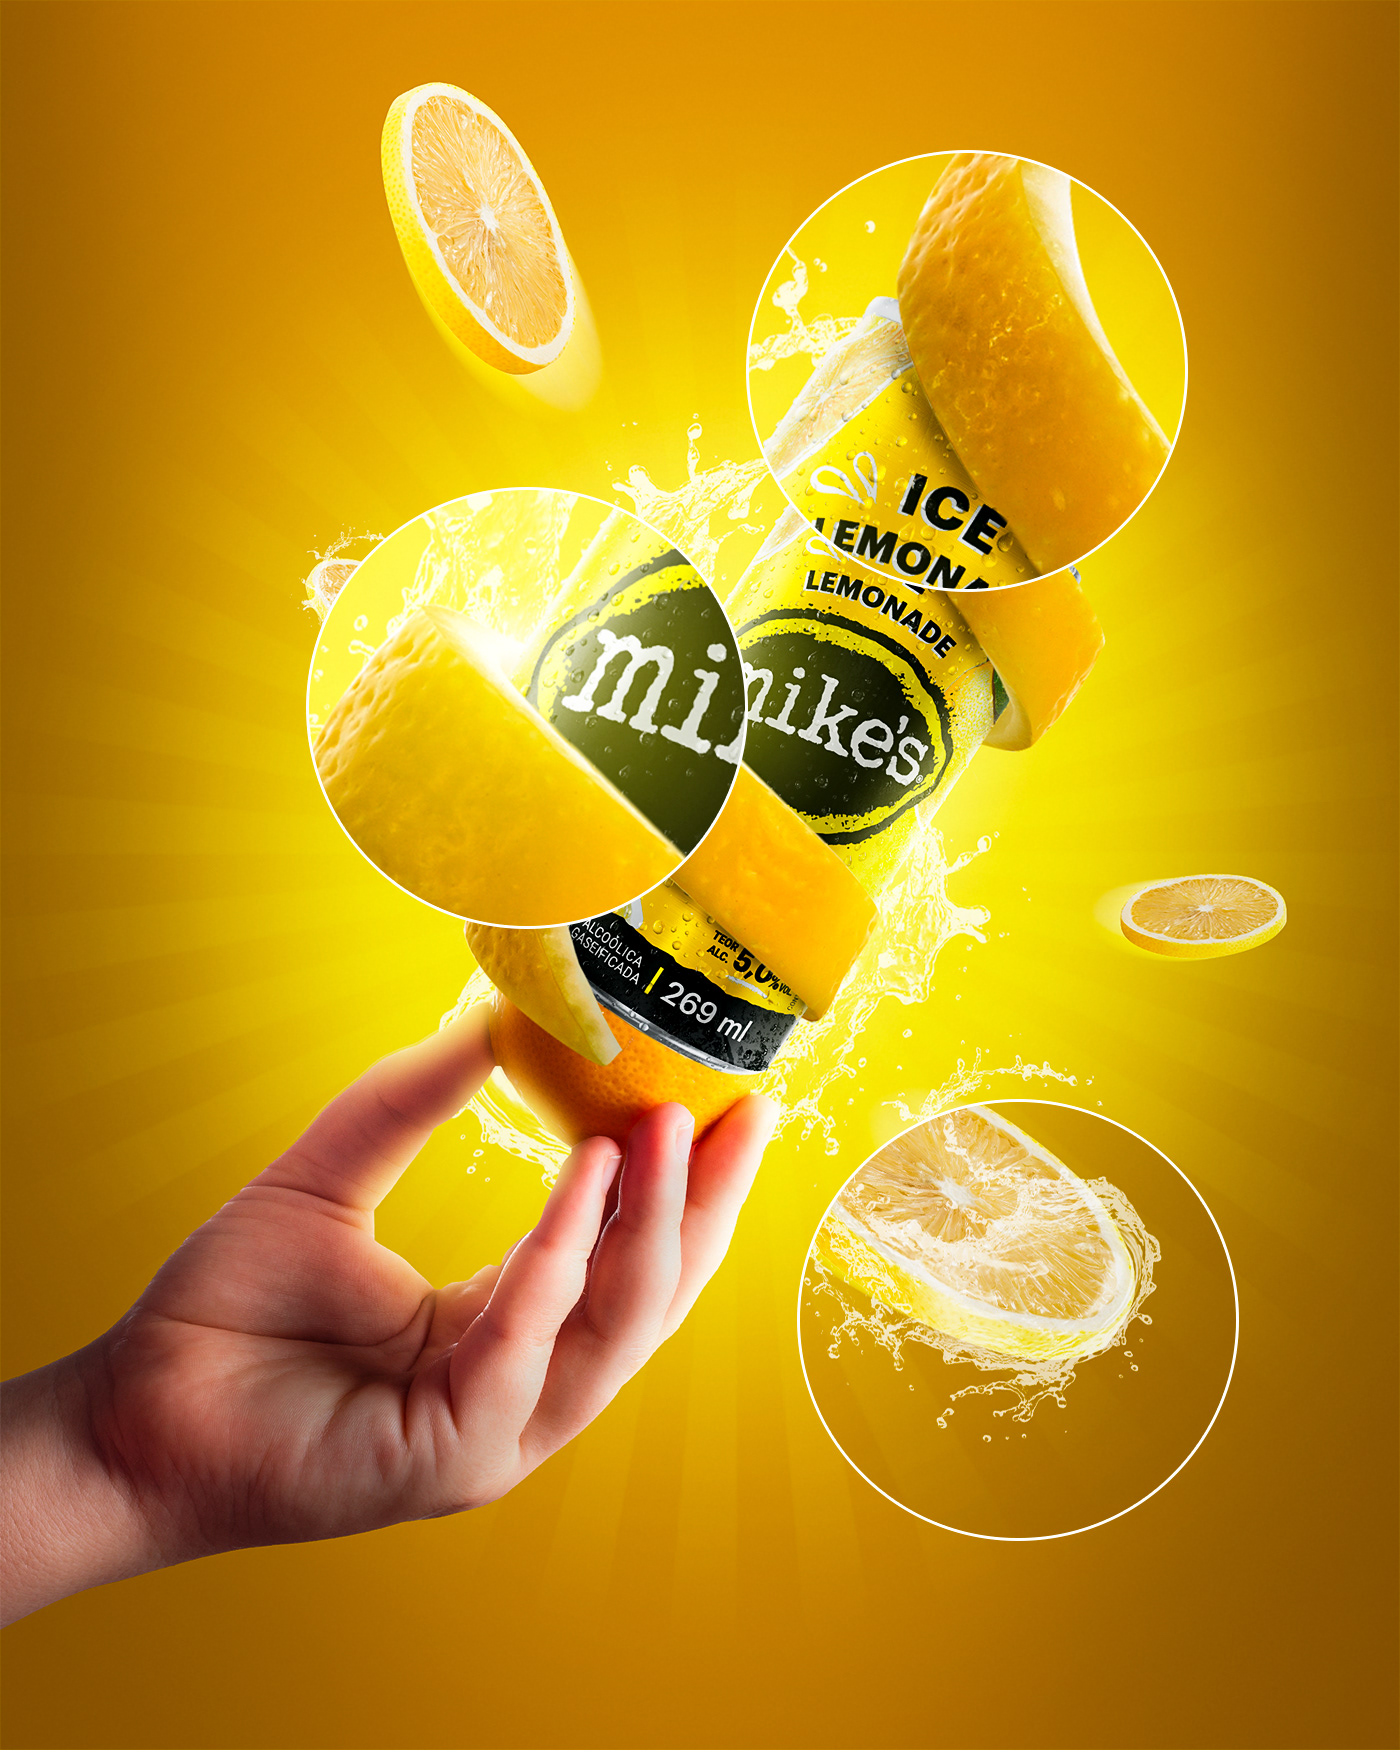 photoshop Graphic Designer design Social media post Mikes publicidade publicity poster marketing   Mike's hard lemonade